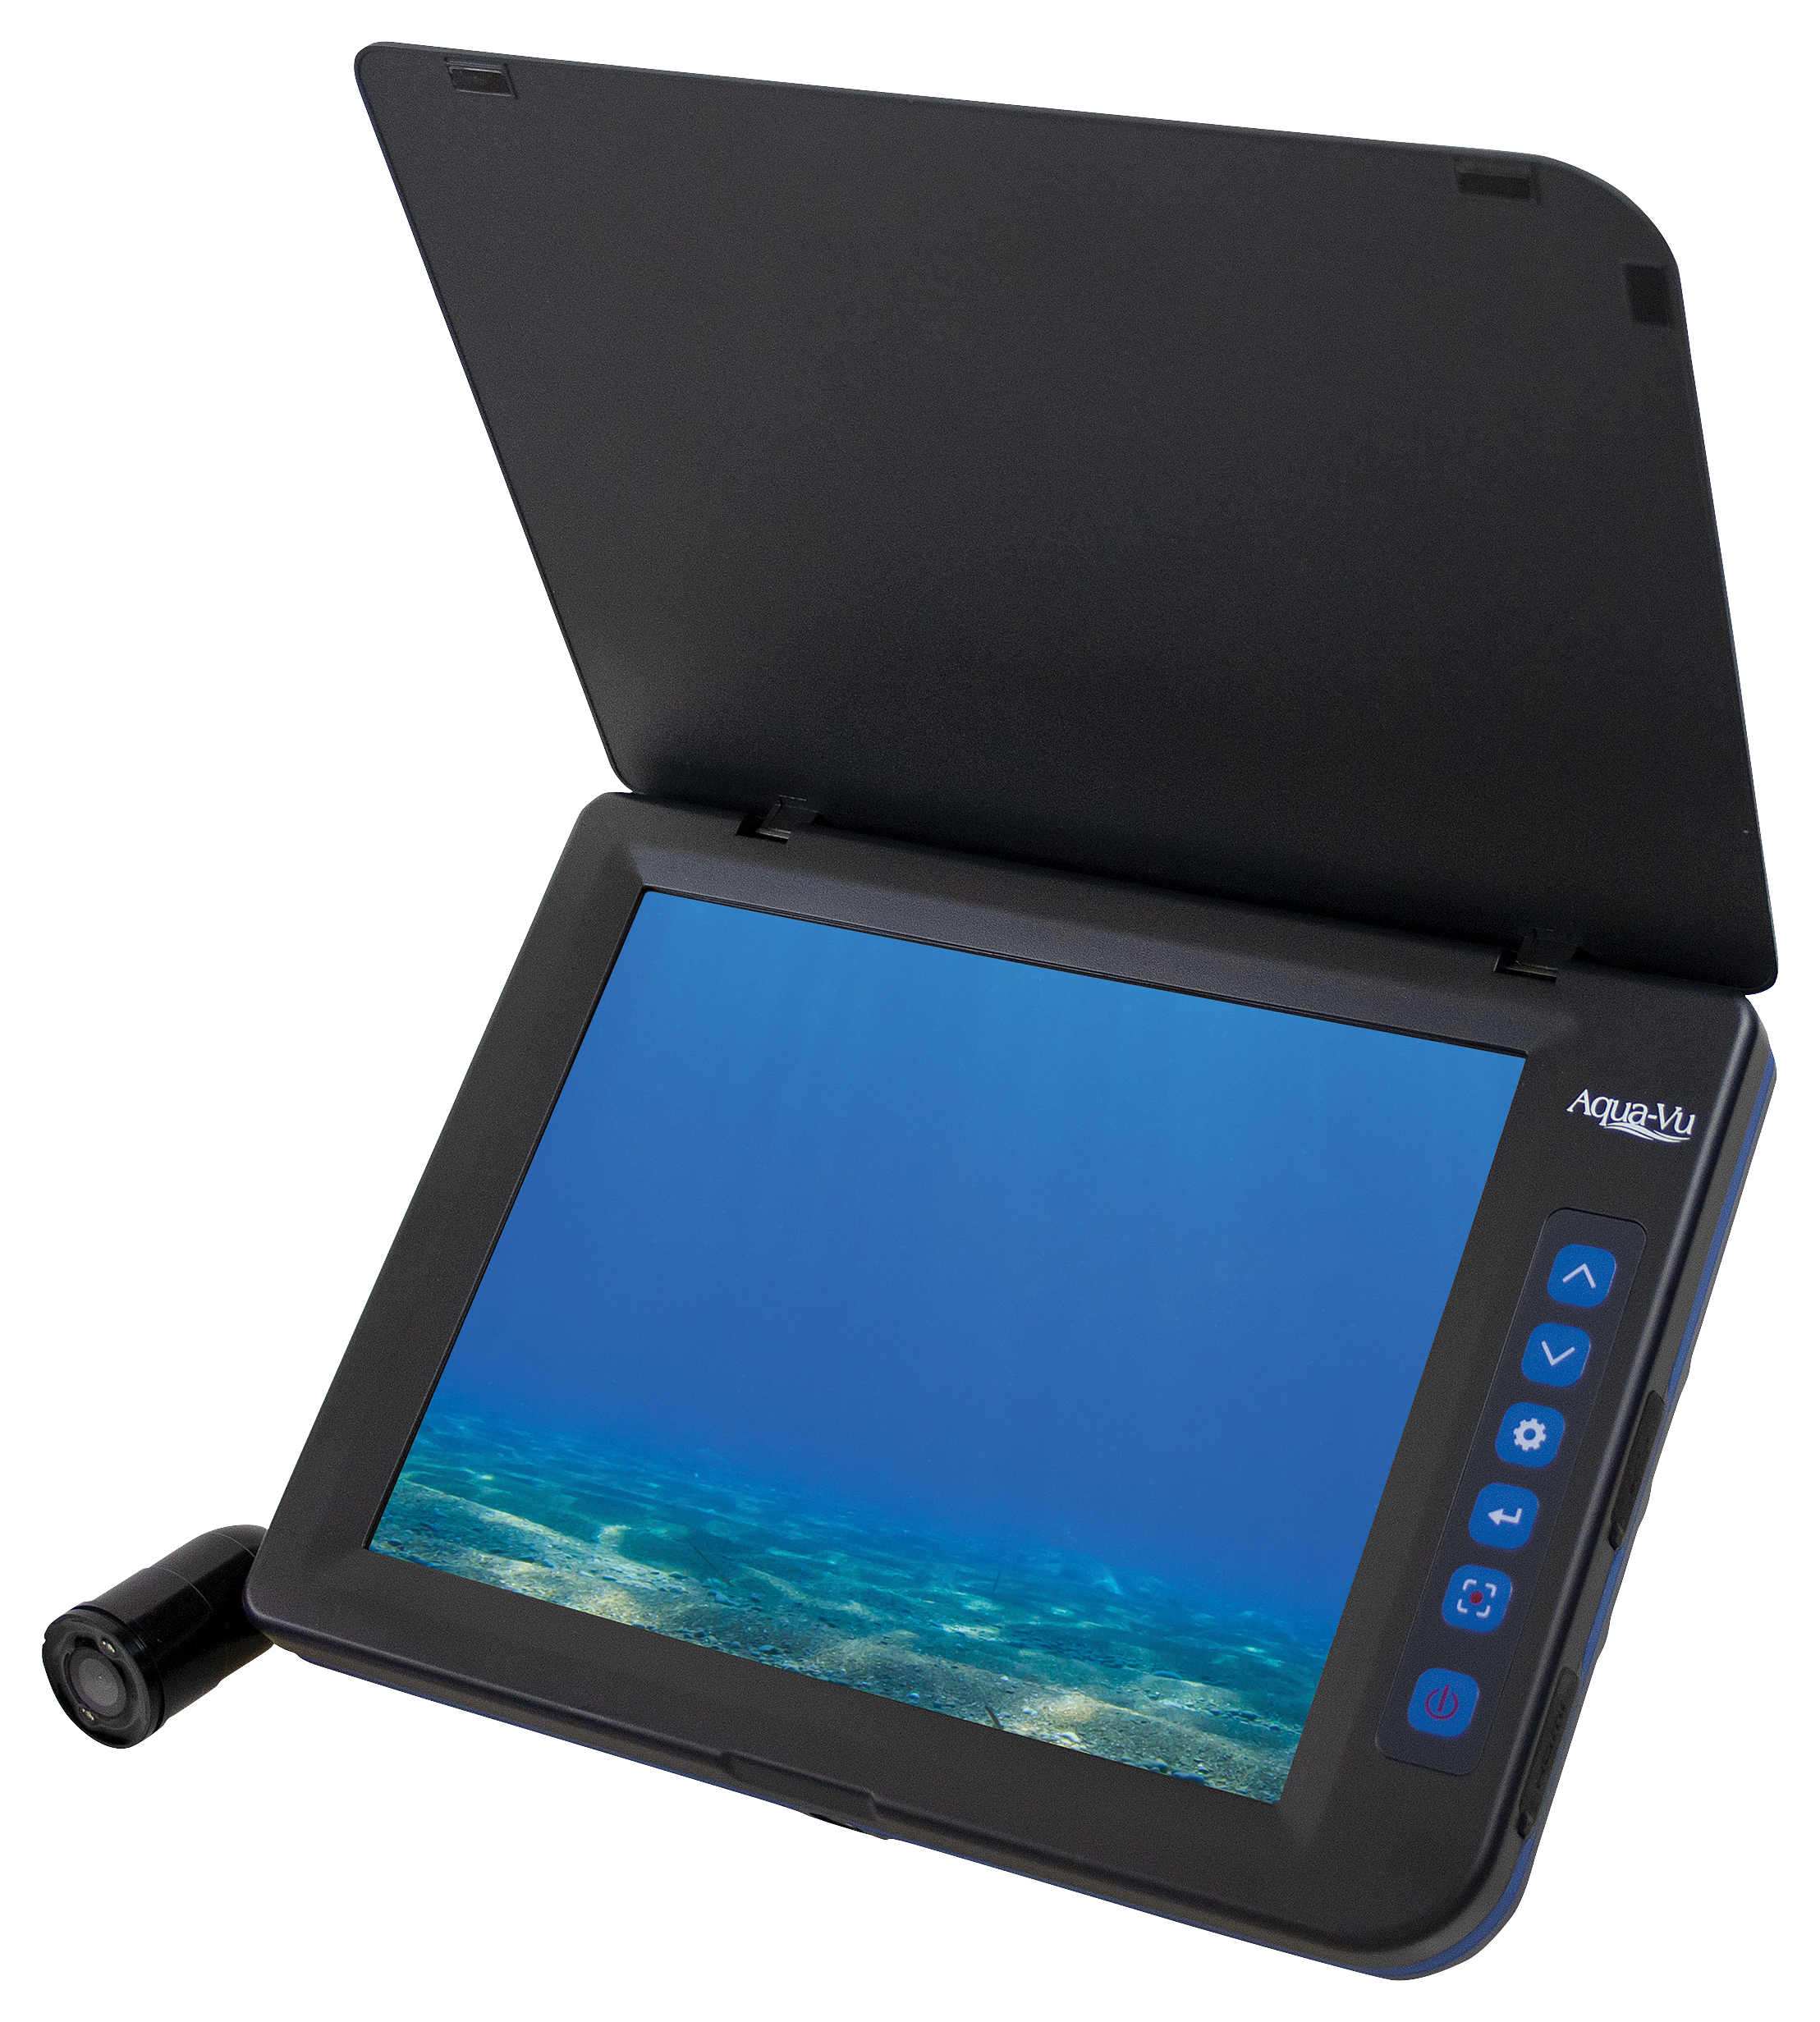 Aqua-Vu AV715c Underwater Camera System with XD Camera Housing and Mo-pod 3